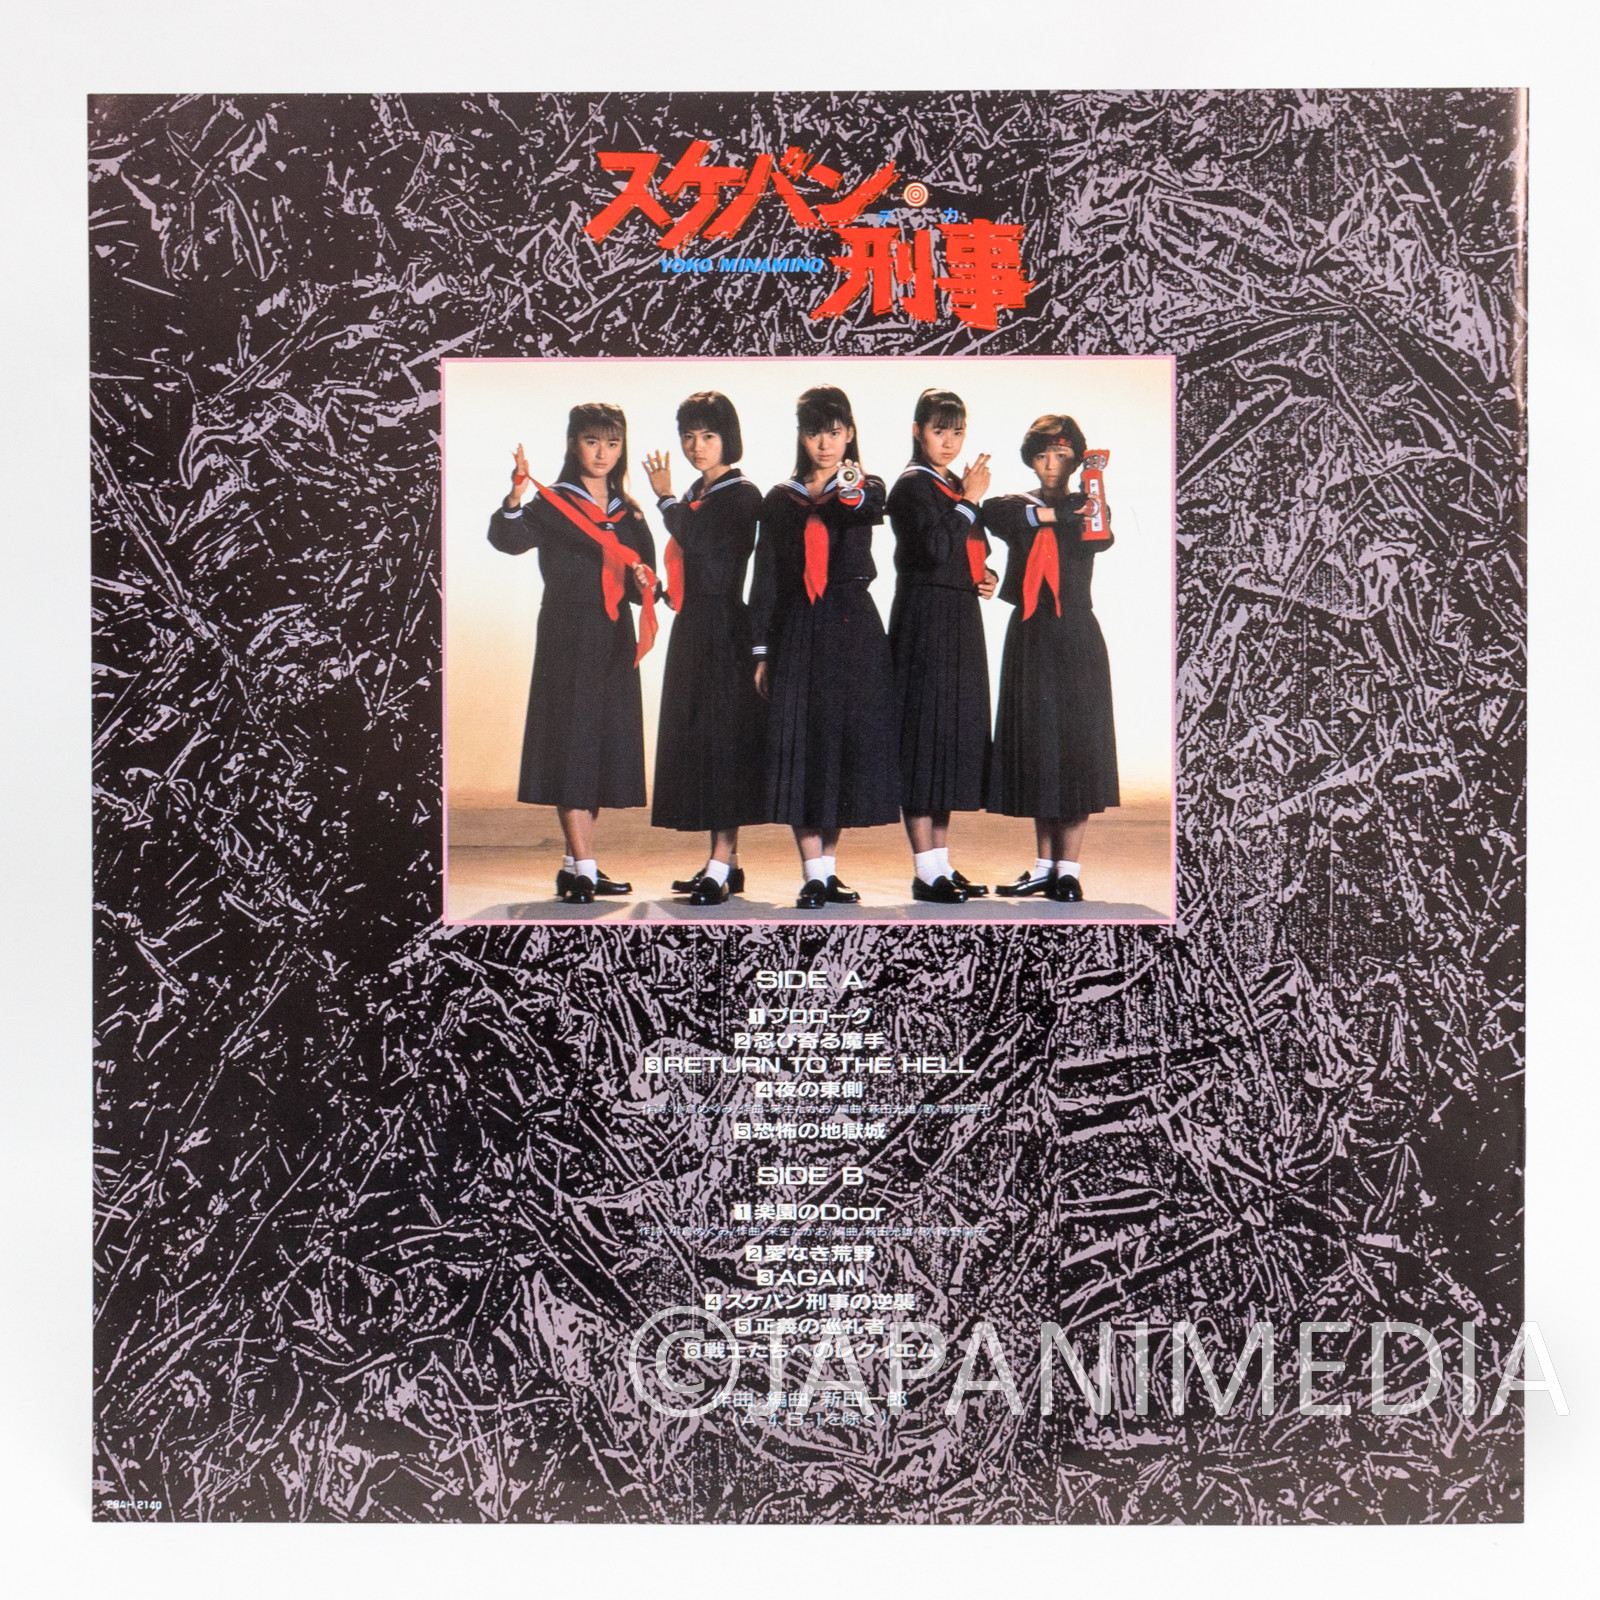 Sukeban Deka Movie Soundtrack 12" Vinyl LP Record 28AH-2140 / YOKO MINAMINO